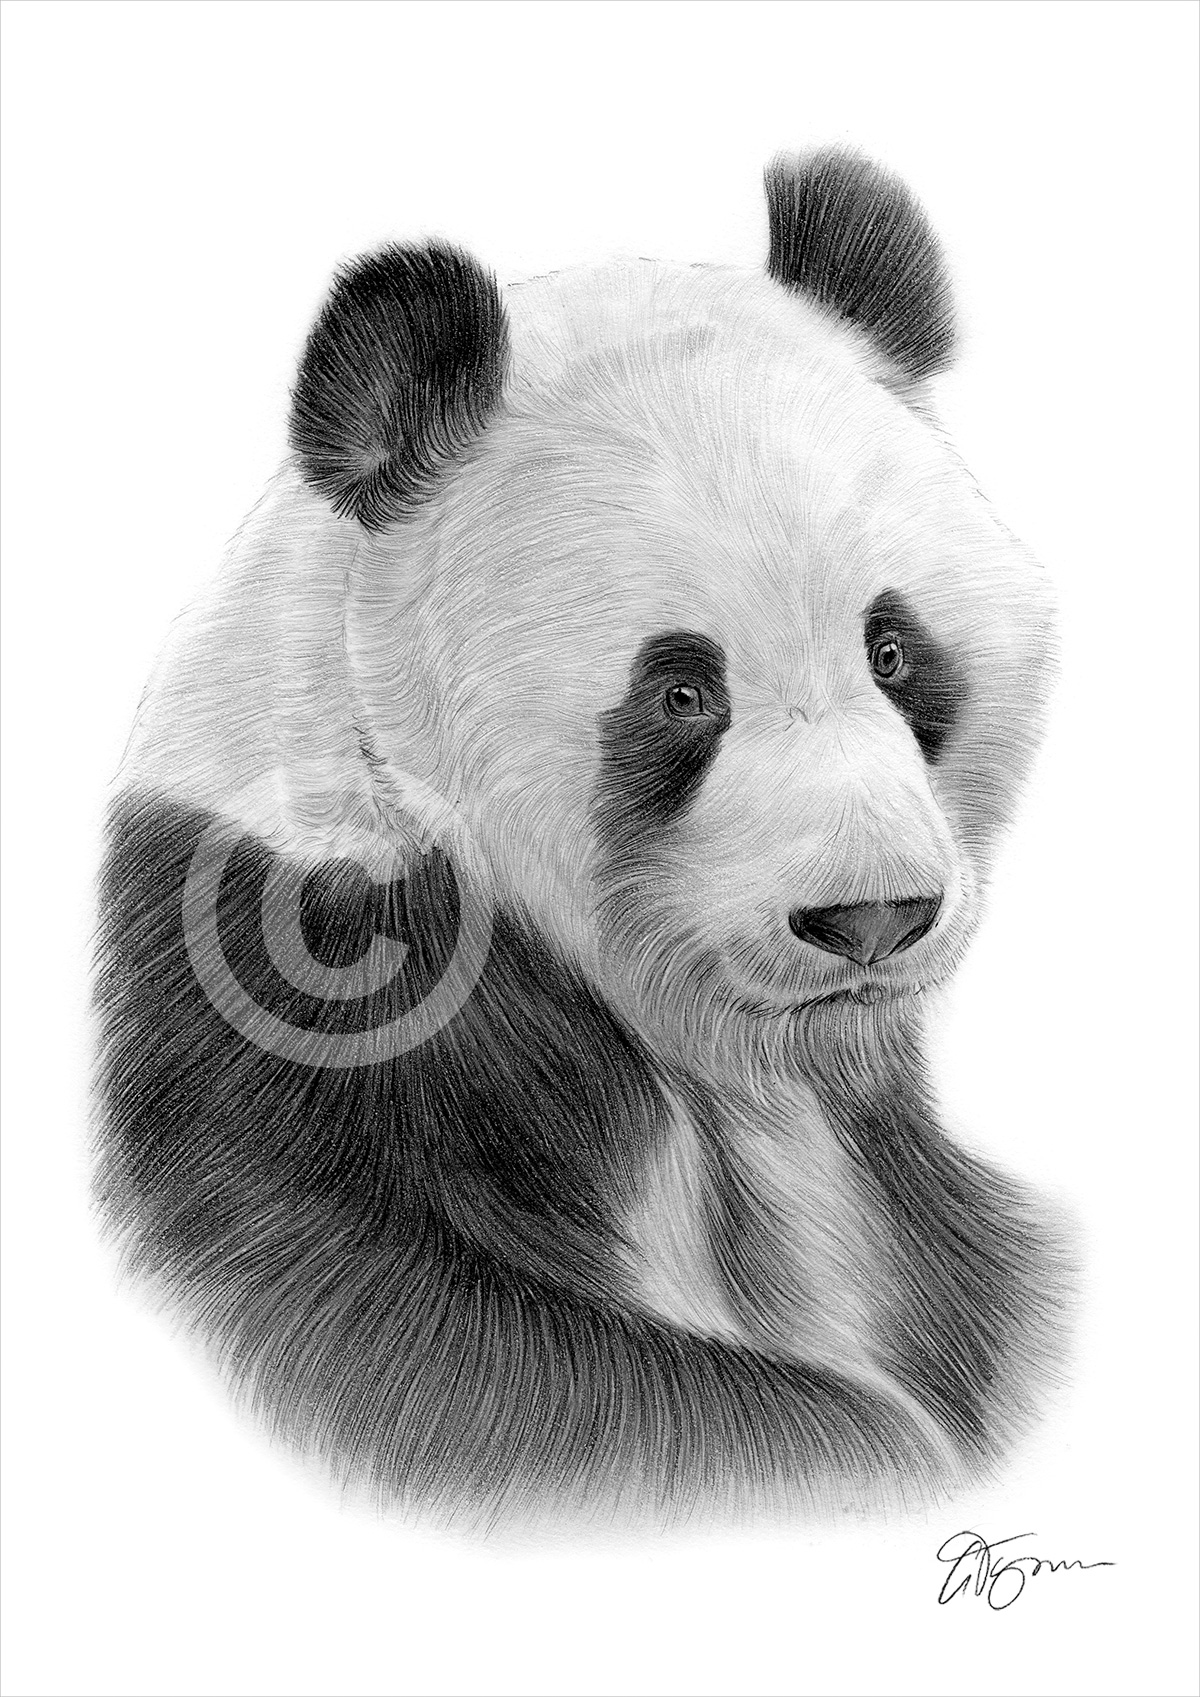 Pencil drawing of a giant panda by UK artist Gary Tymon